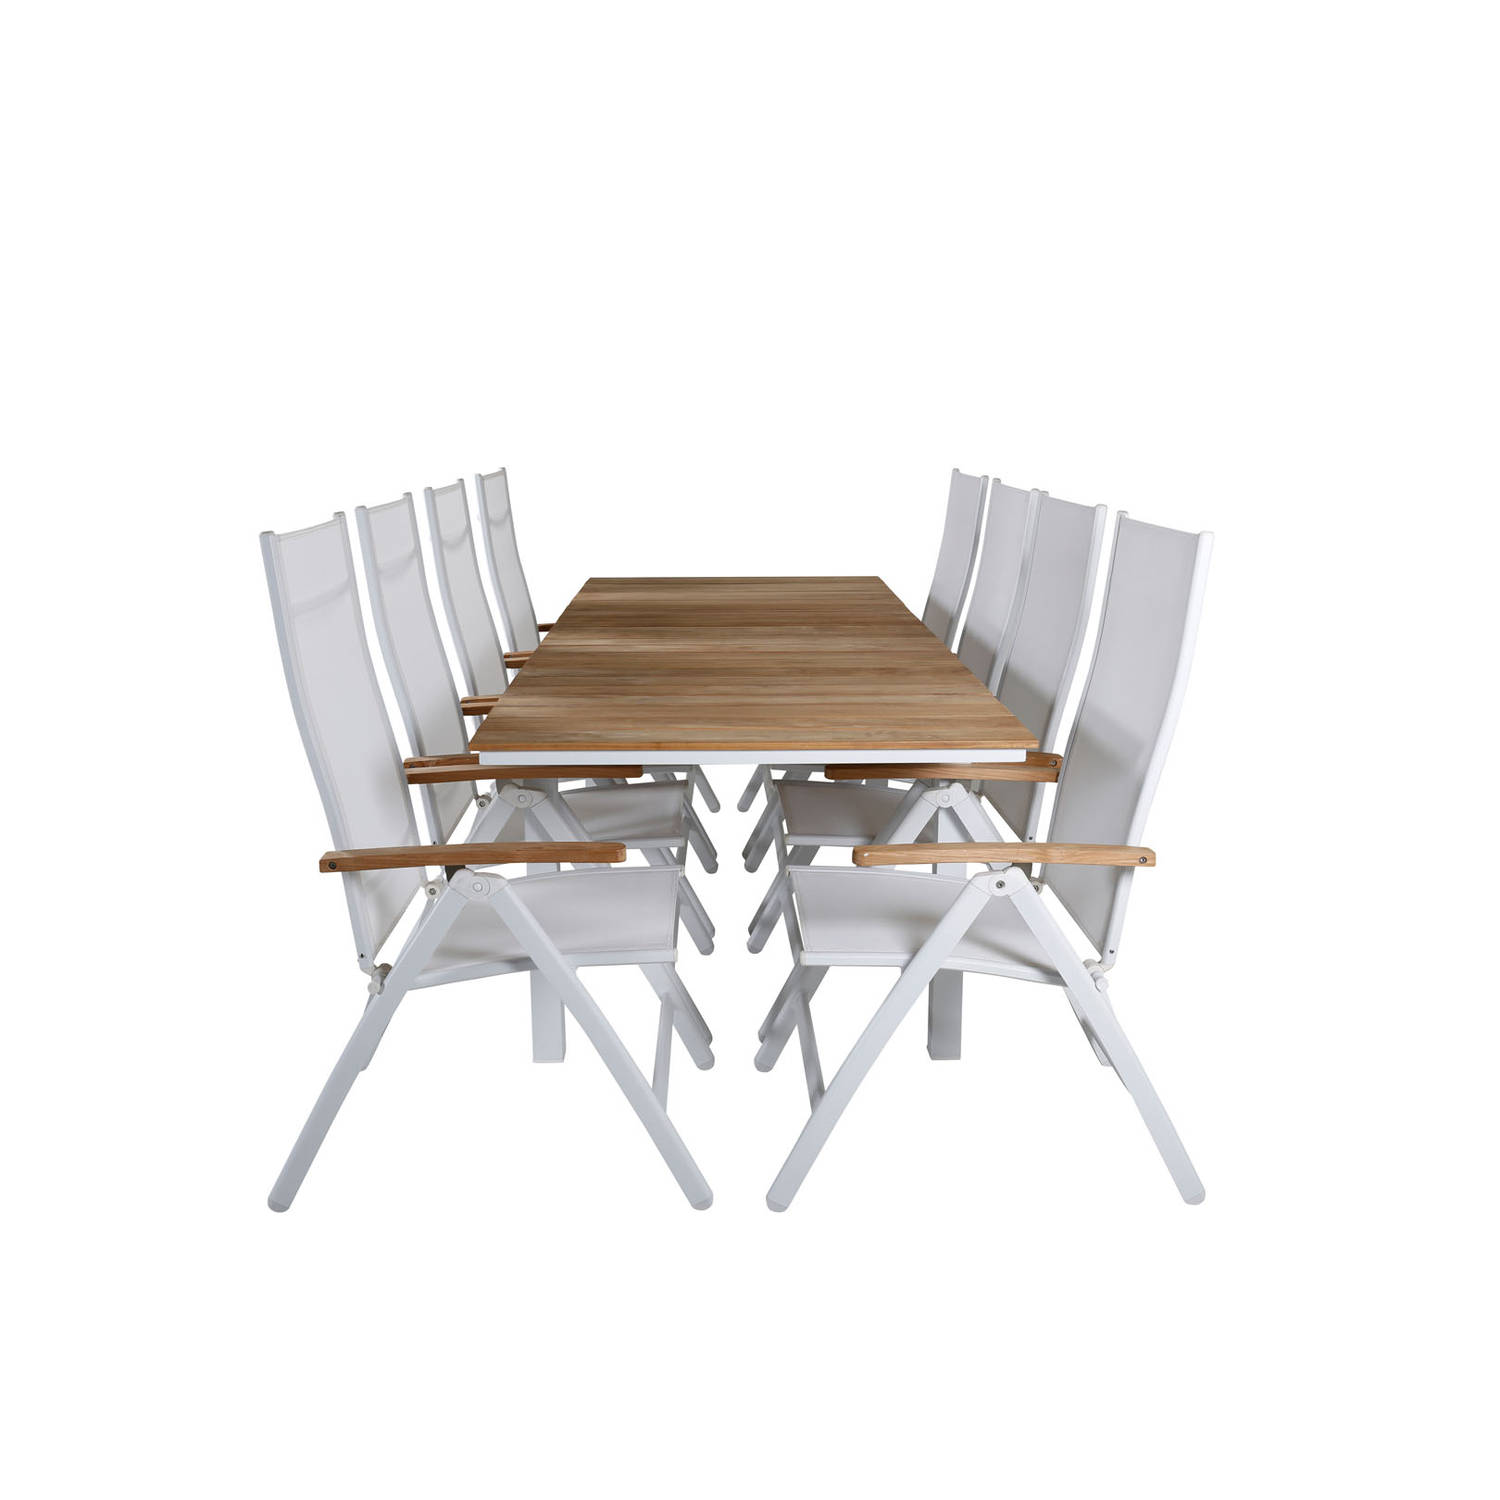 Mexico tuinmeubelset tafel 90x180/240cm en 8 stoel Panama wit, naturel.